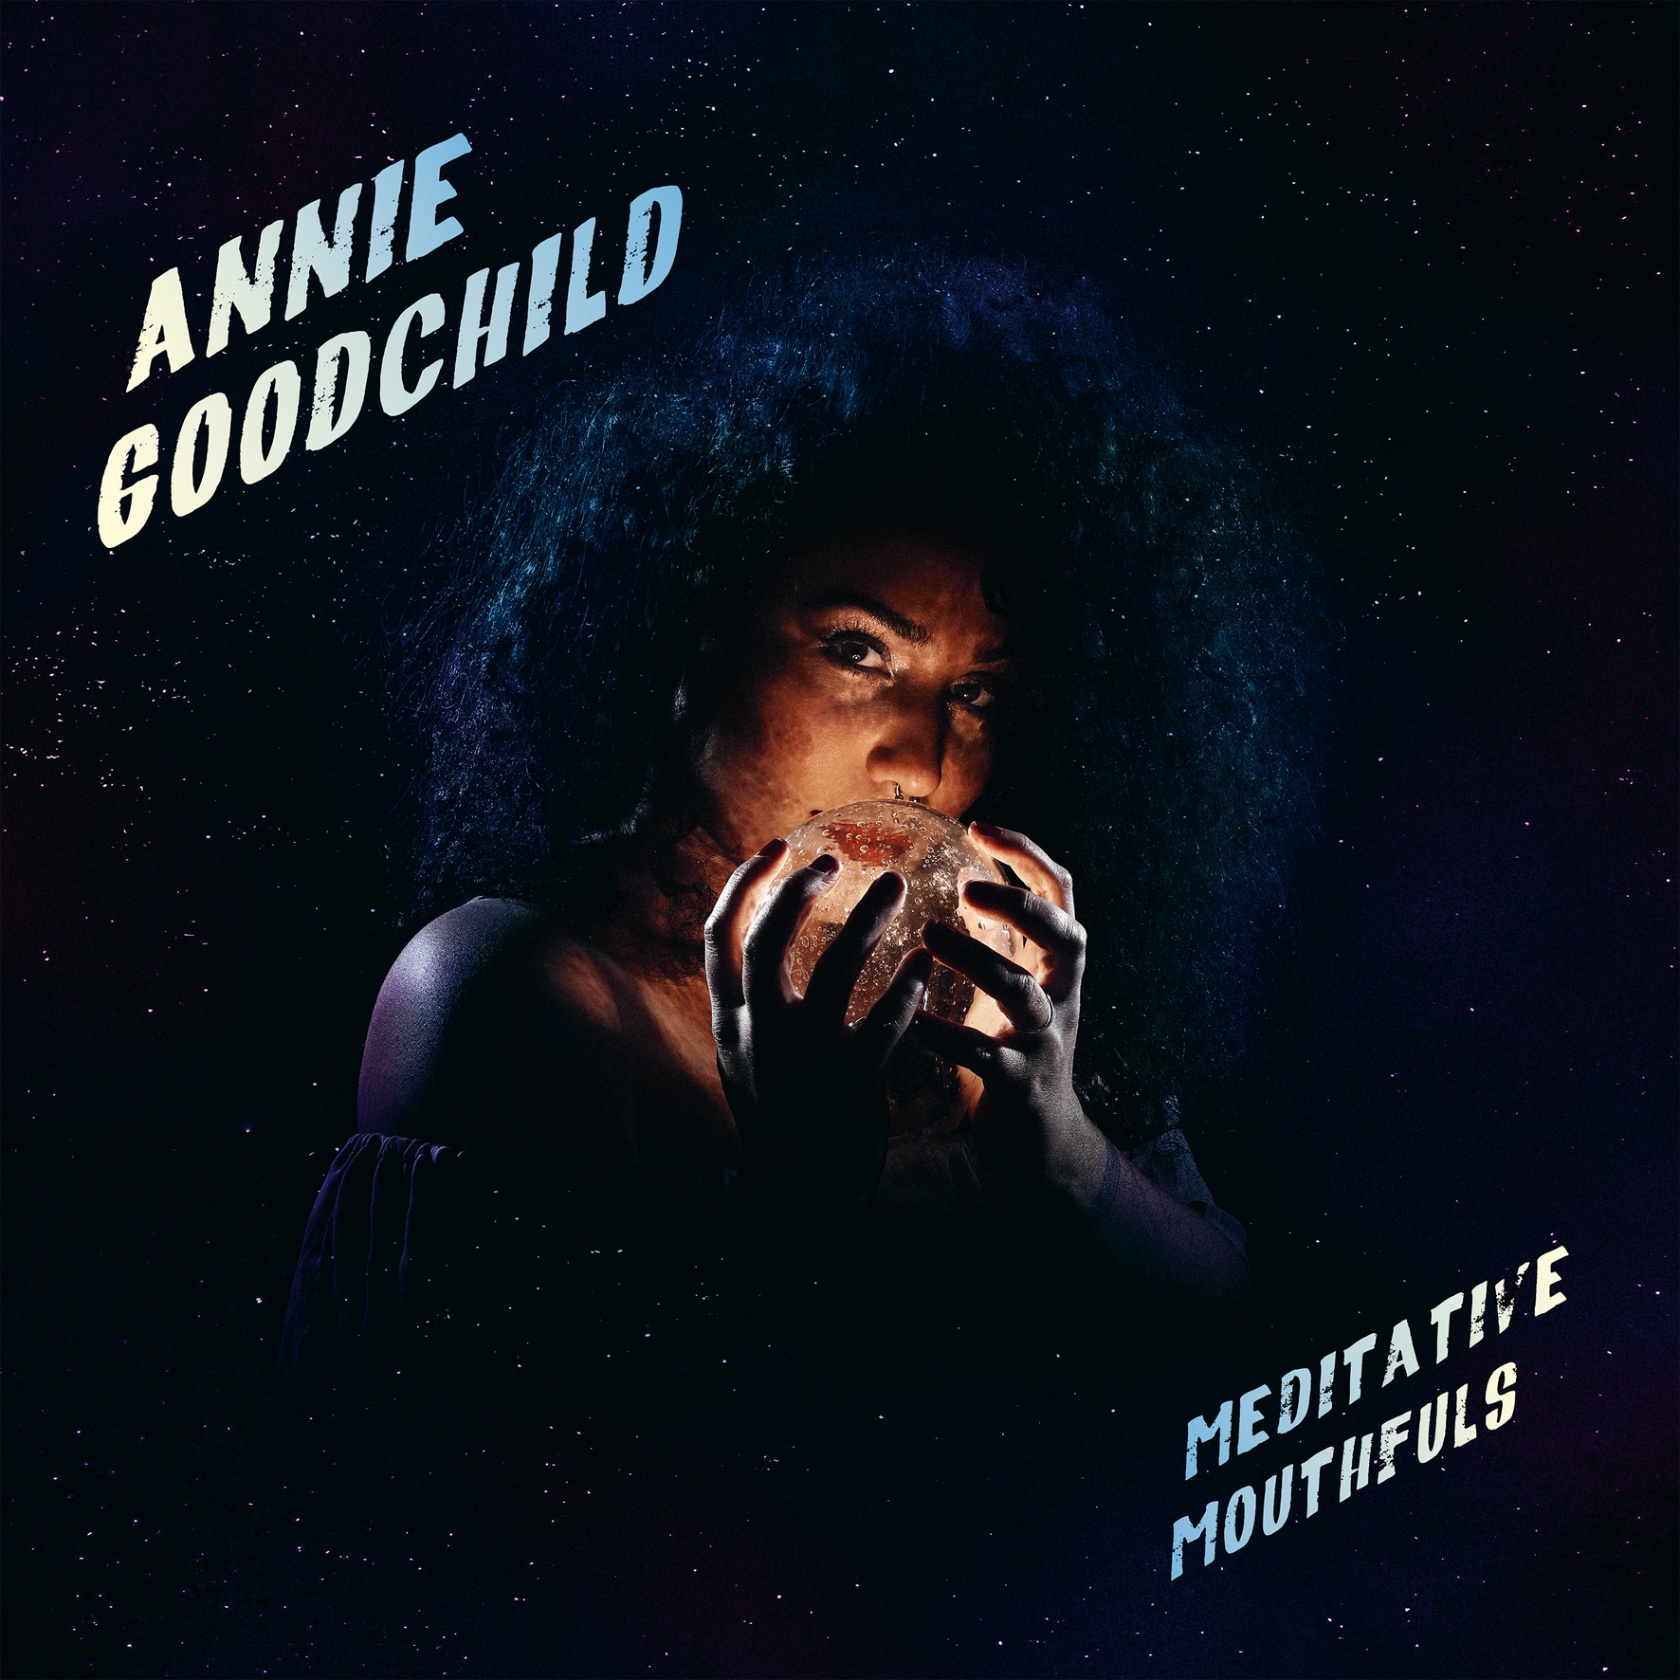 Annie Goodchild – Meditative Mouthfuls (Cover)